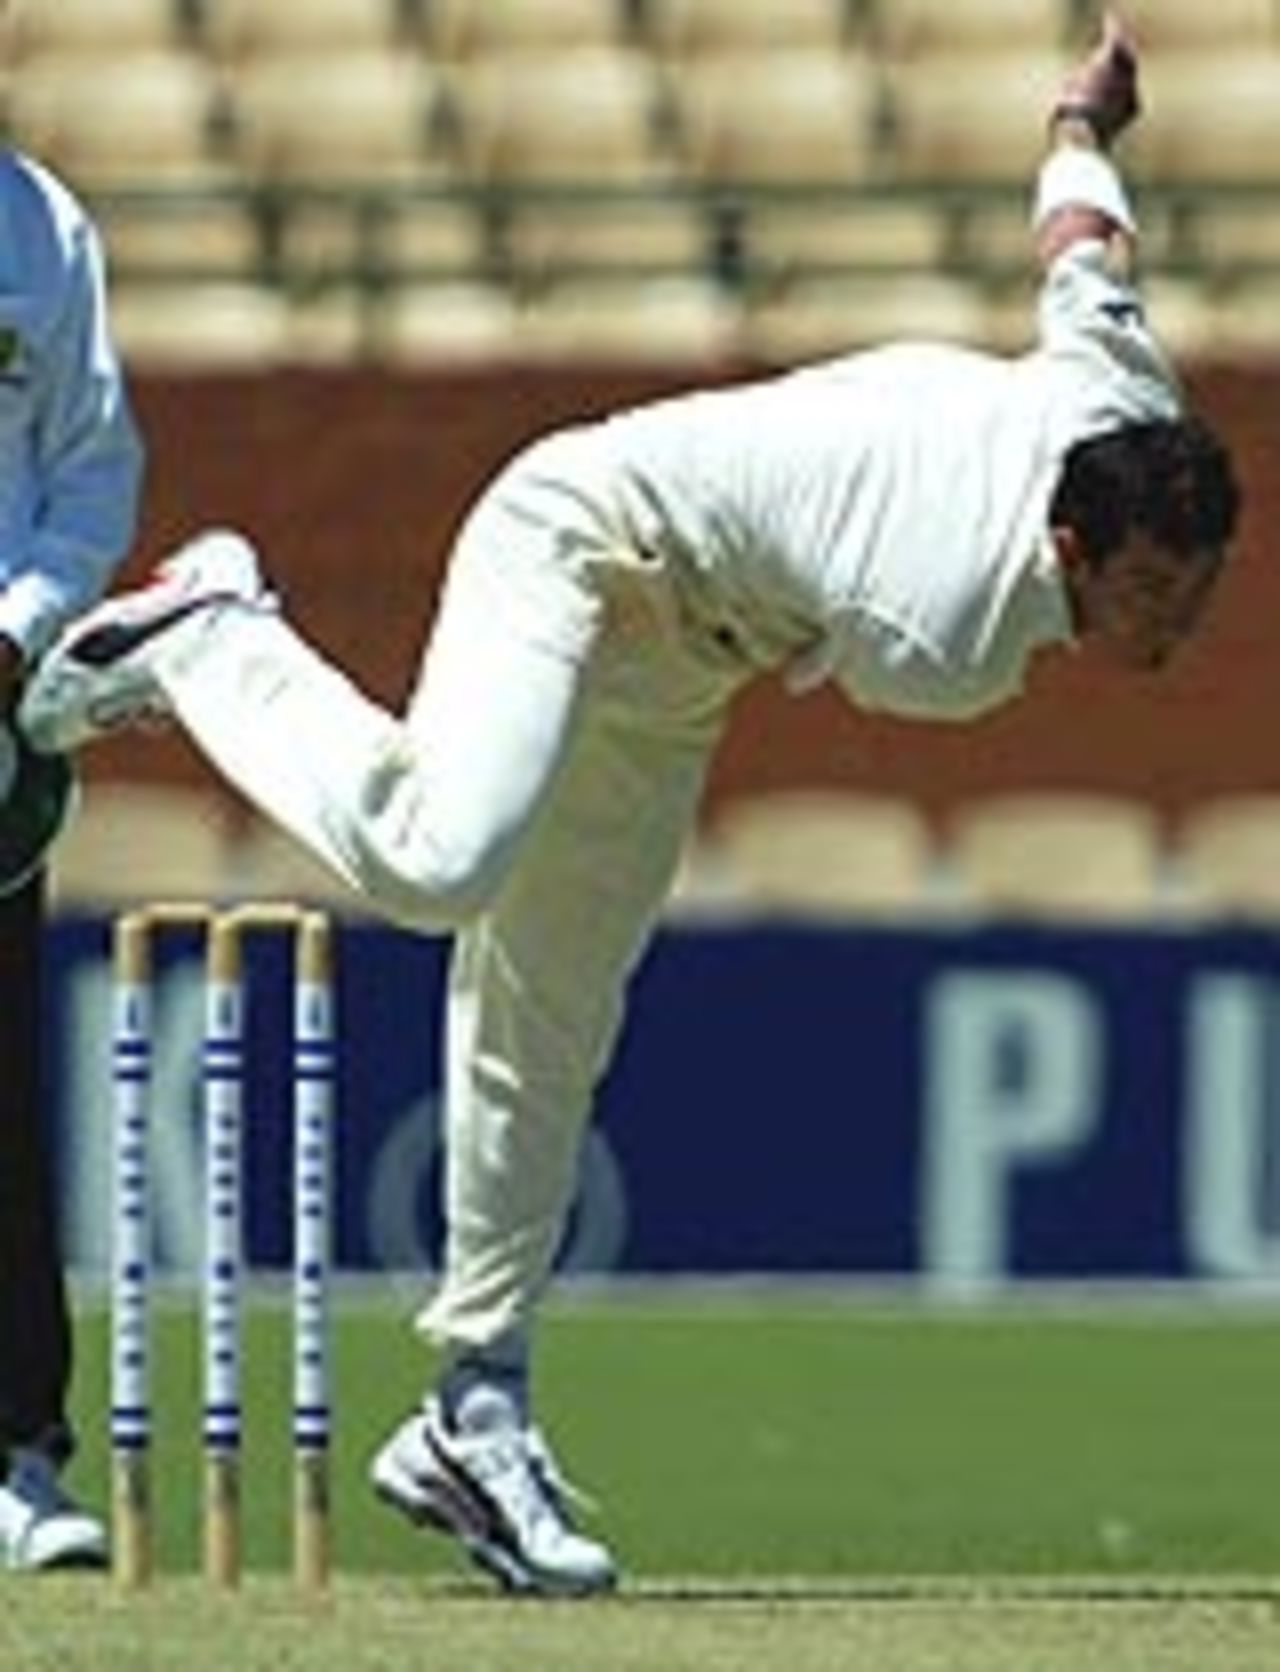 Mark Cleary on his way to a four-wicket haul, South Australia v Tasmania, January 11, 2004